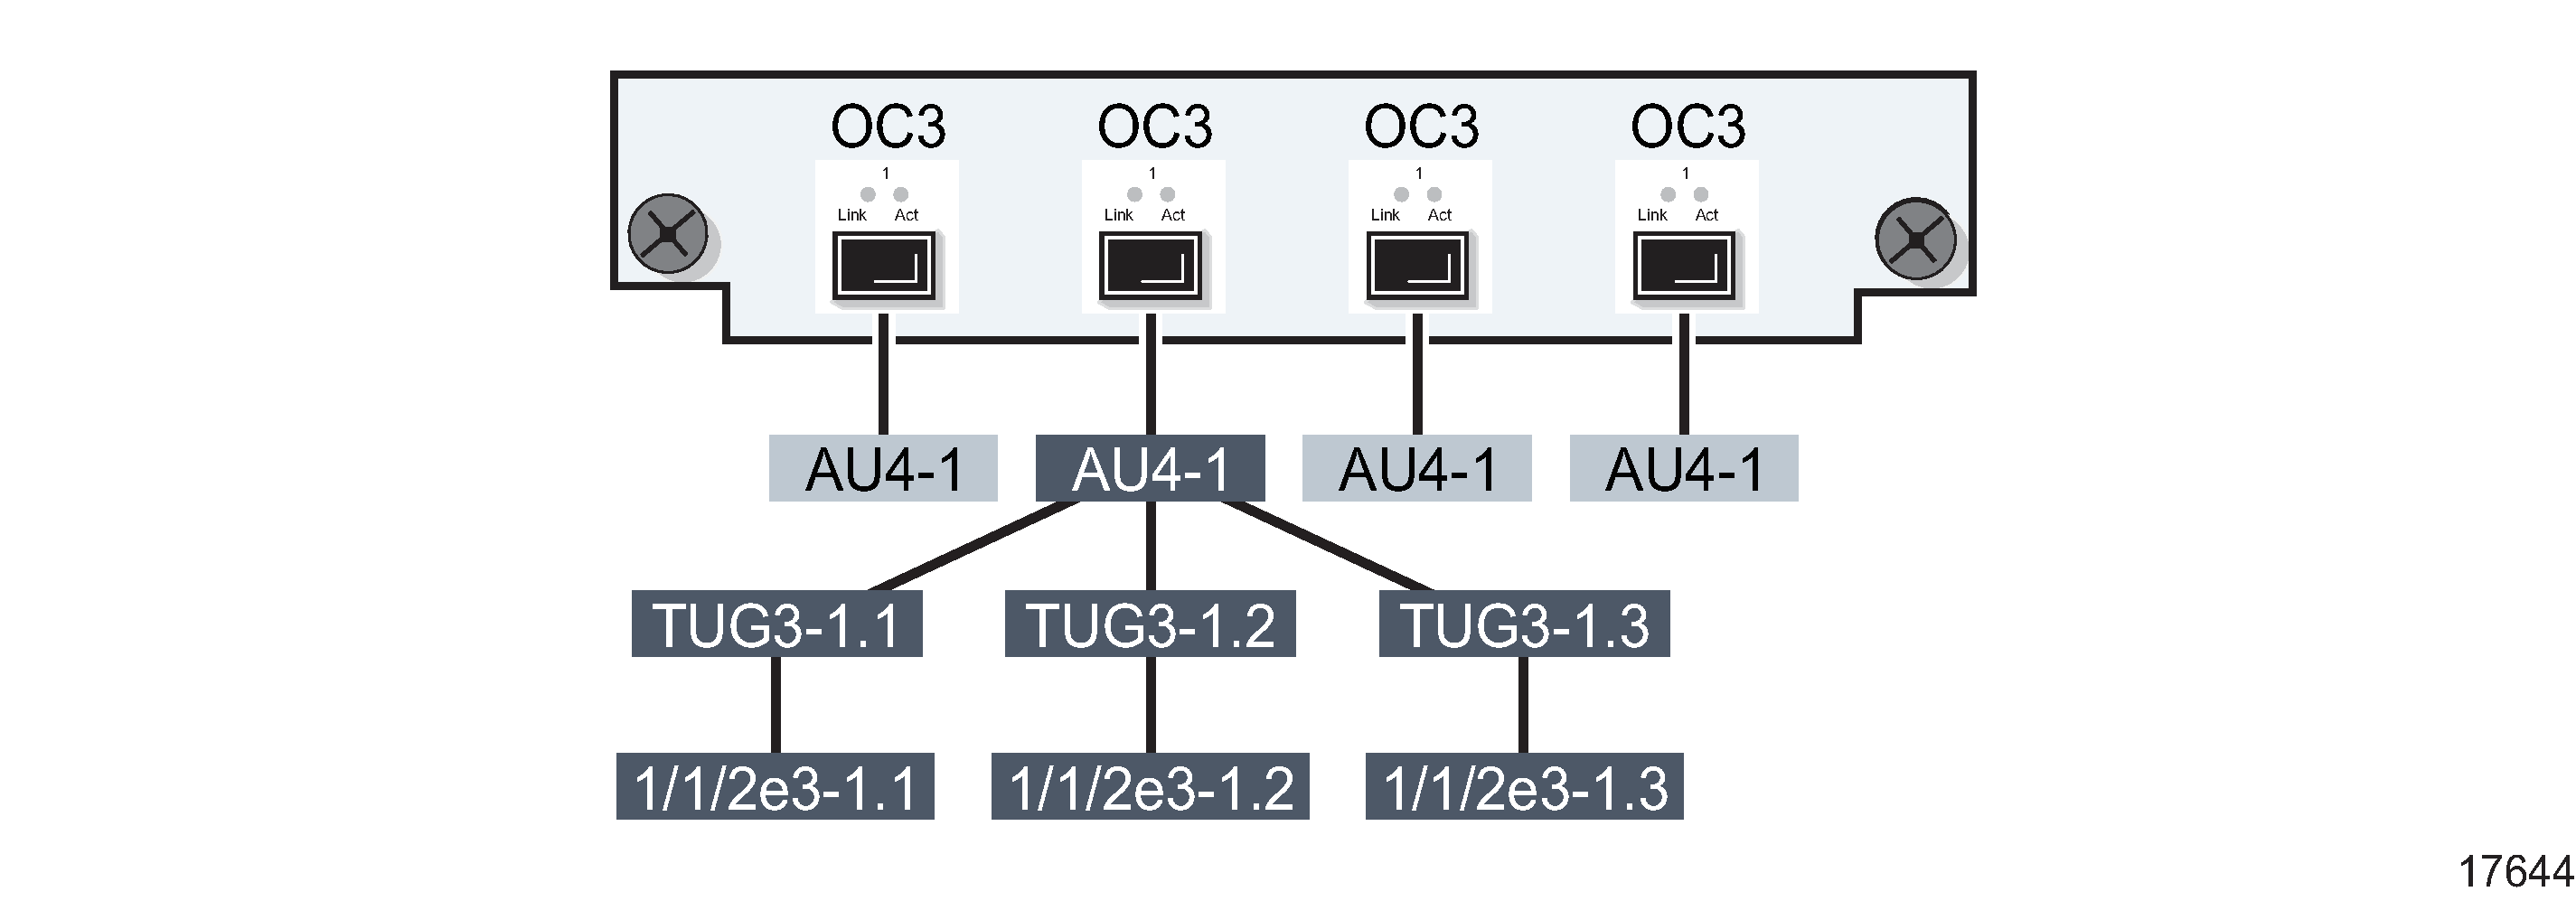 Channelized 4 × OC-3 port structure using AU4/TU3 sub-channels